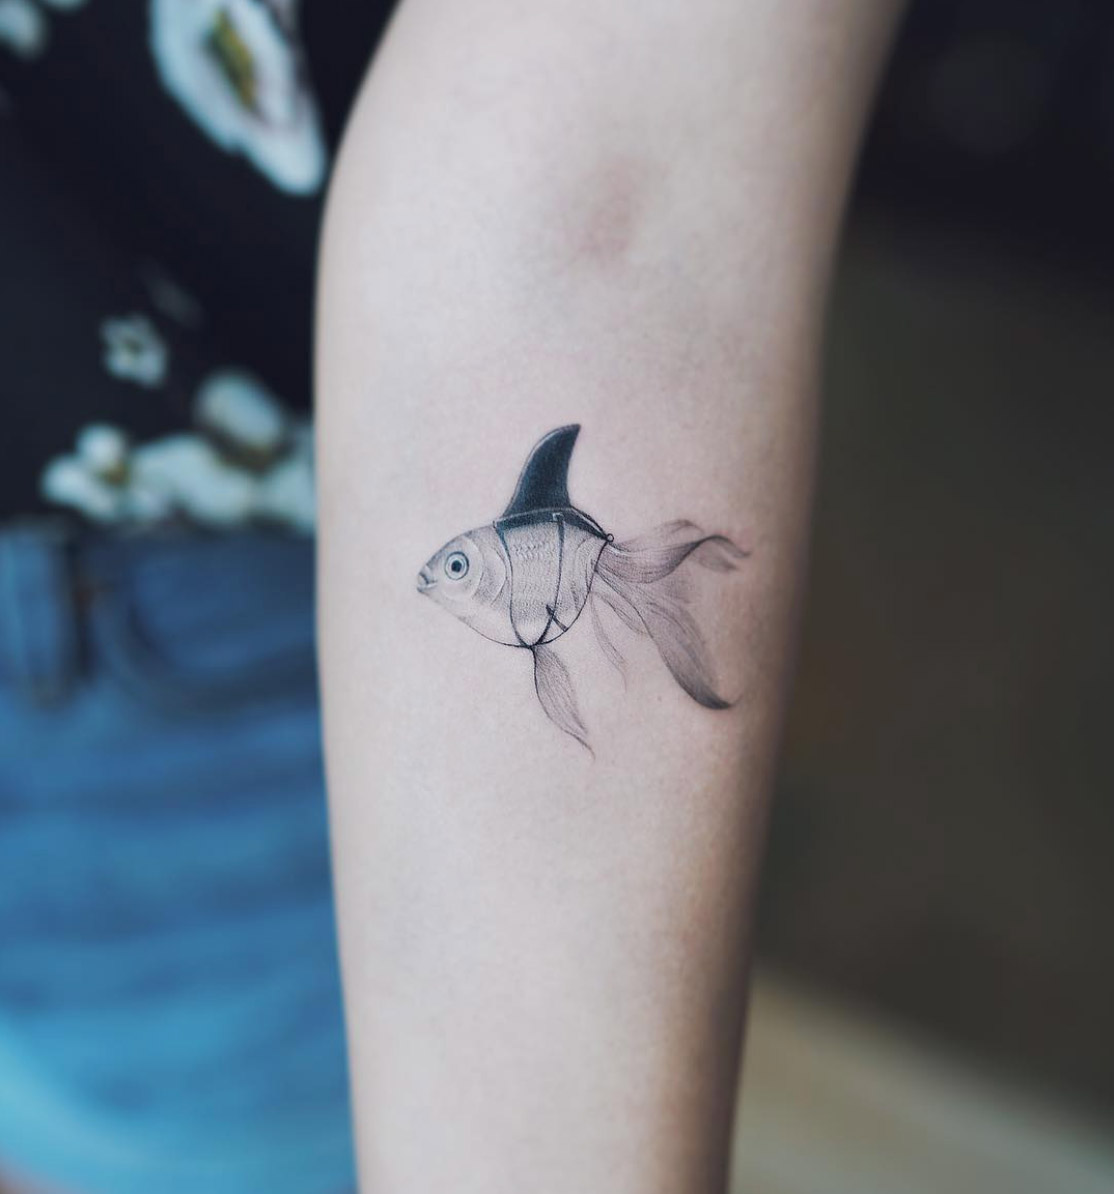 A goldfish by Nando